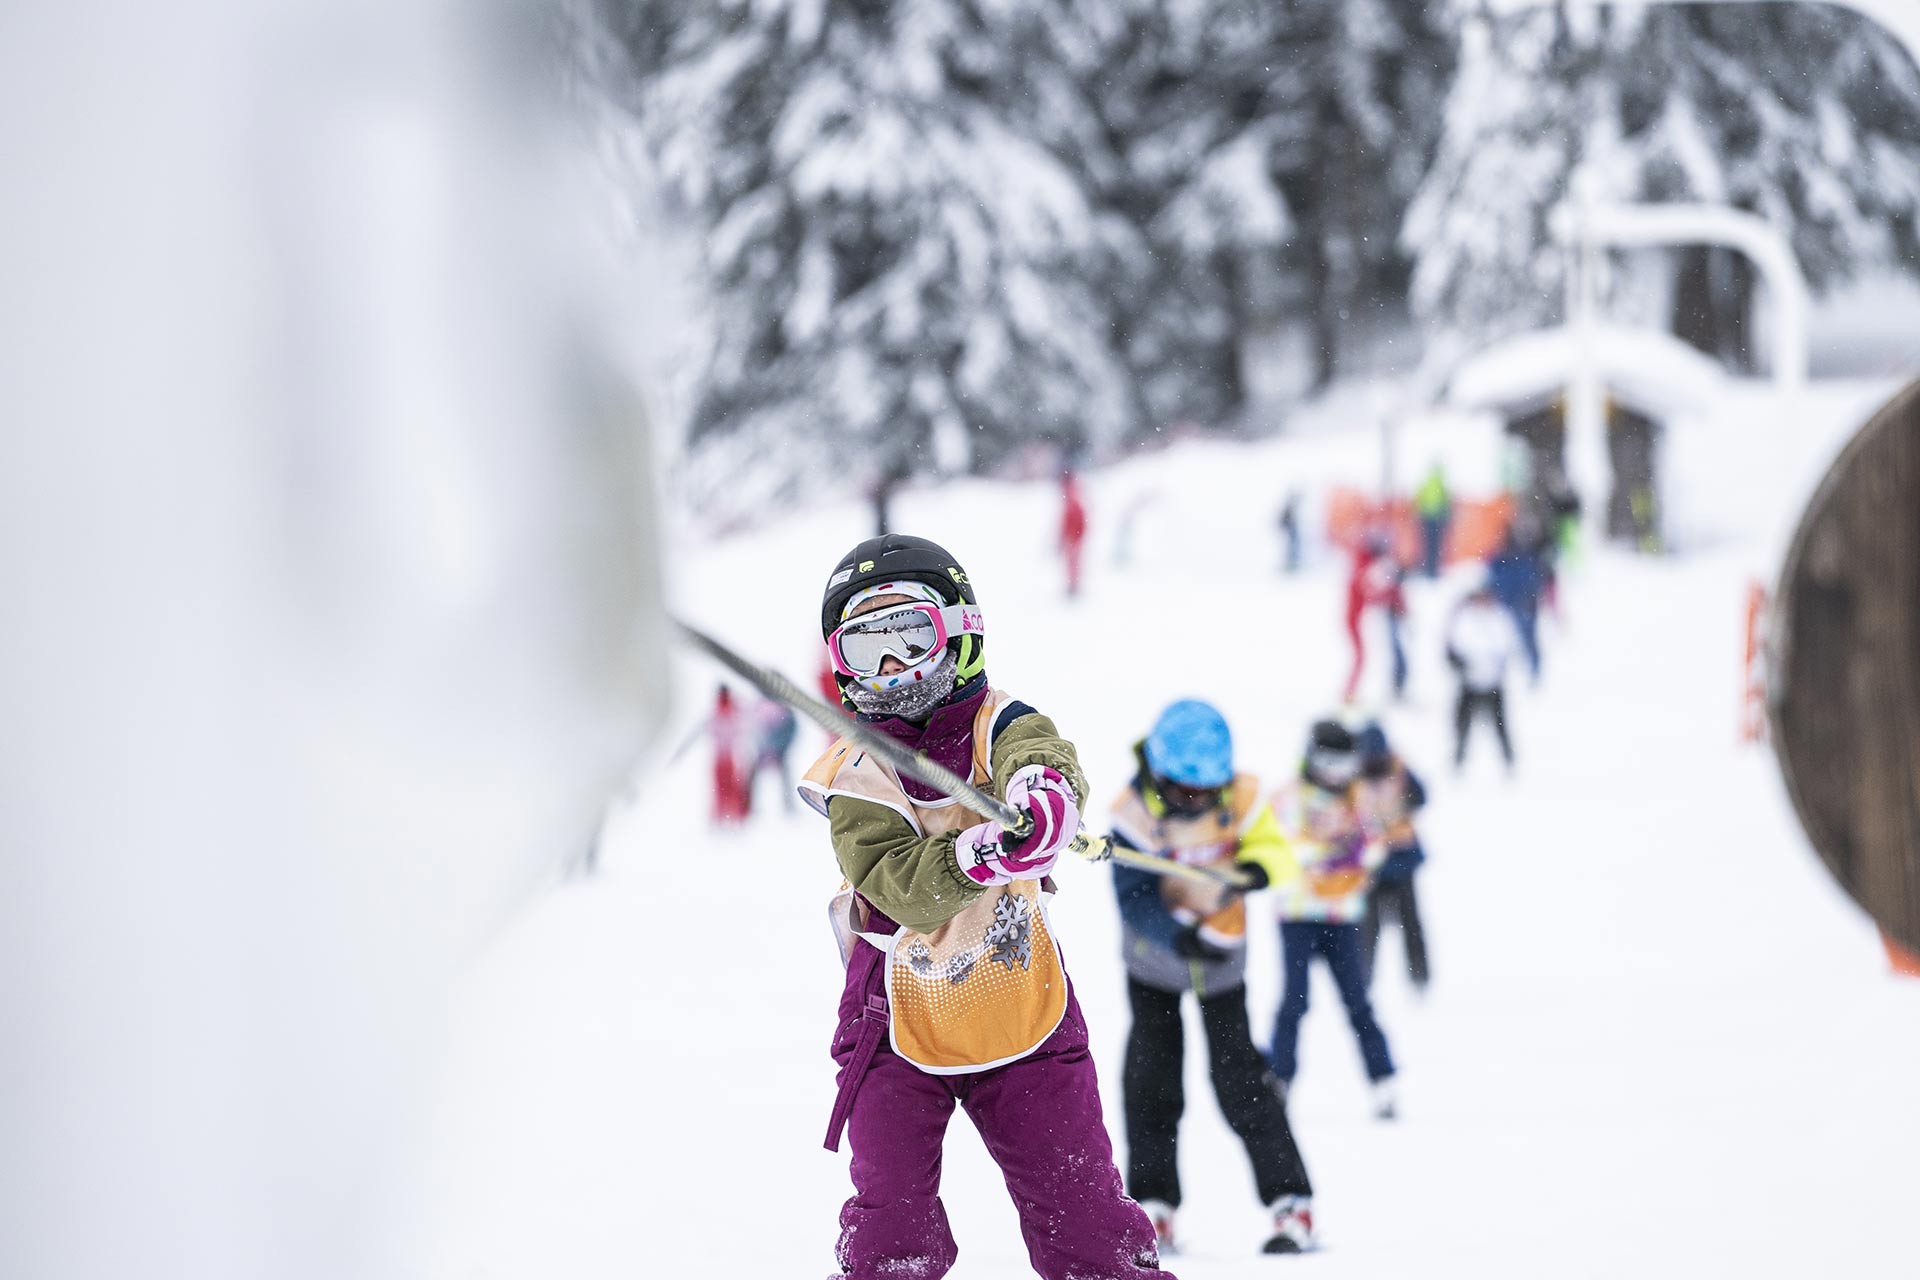 Ski lessons + daycare